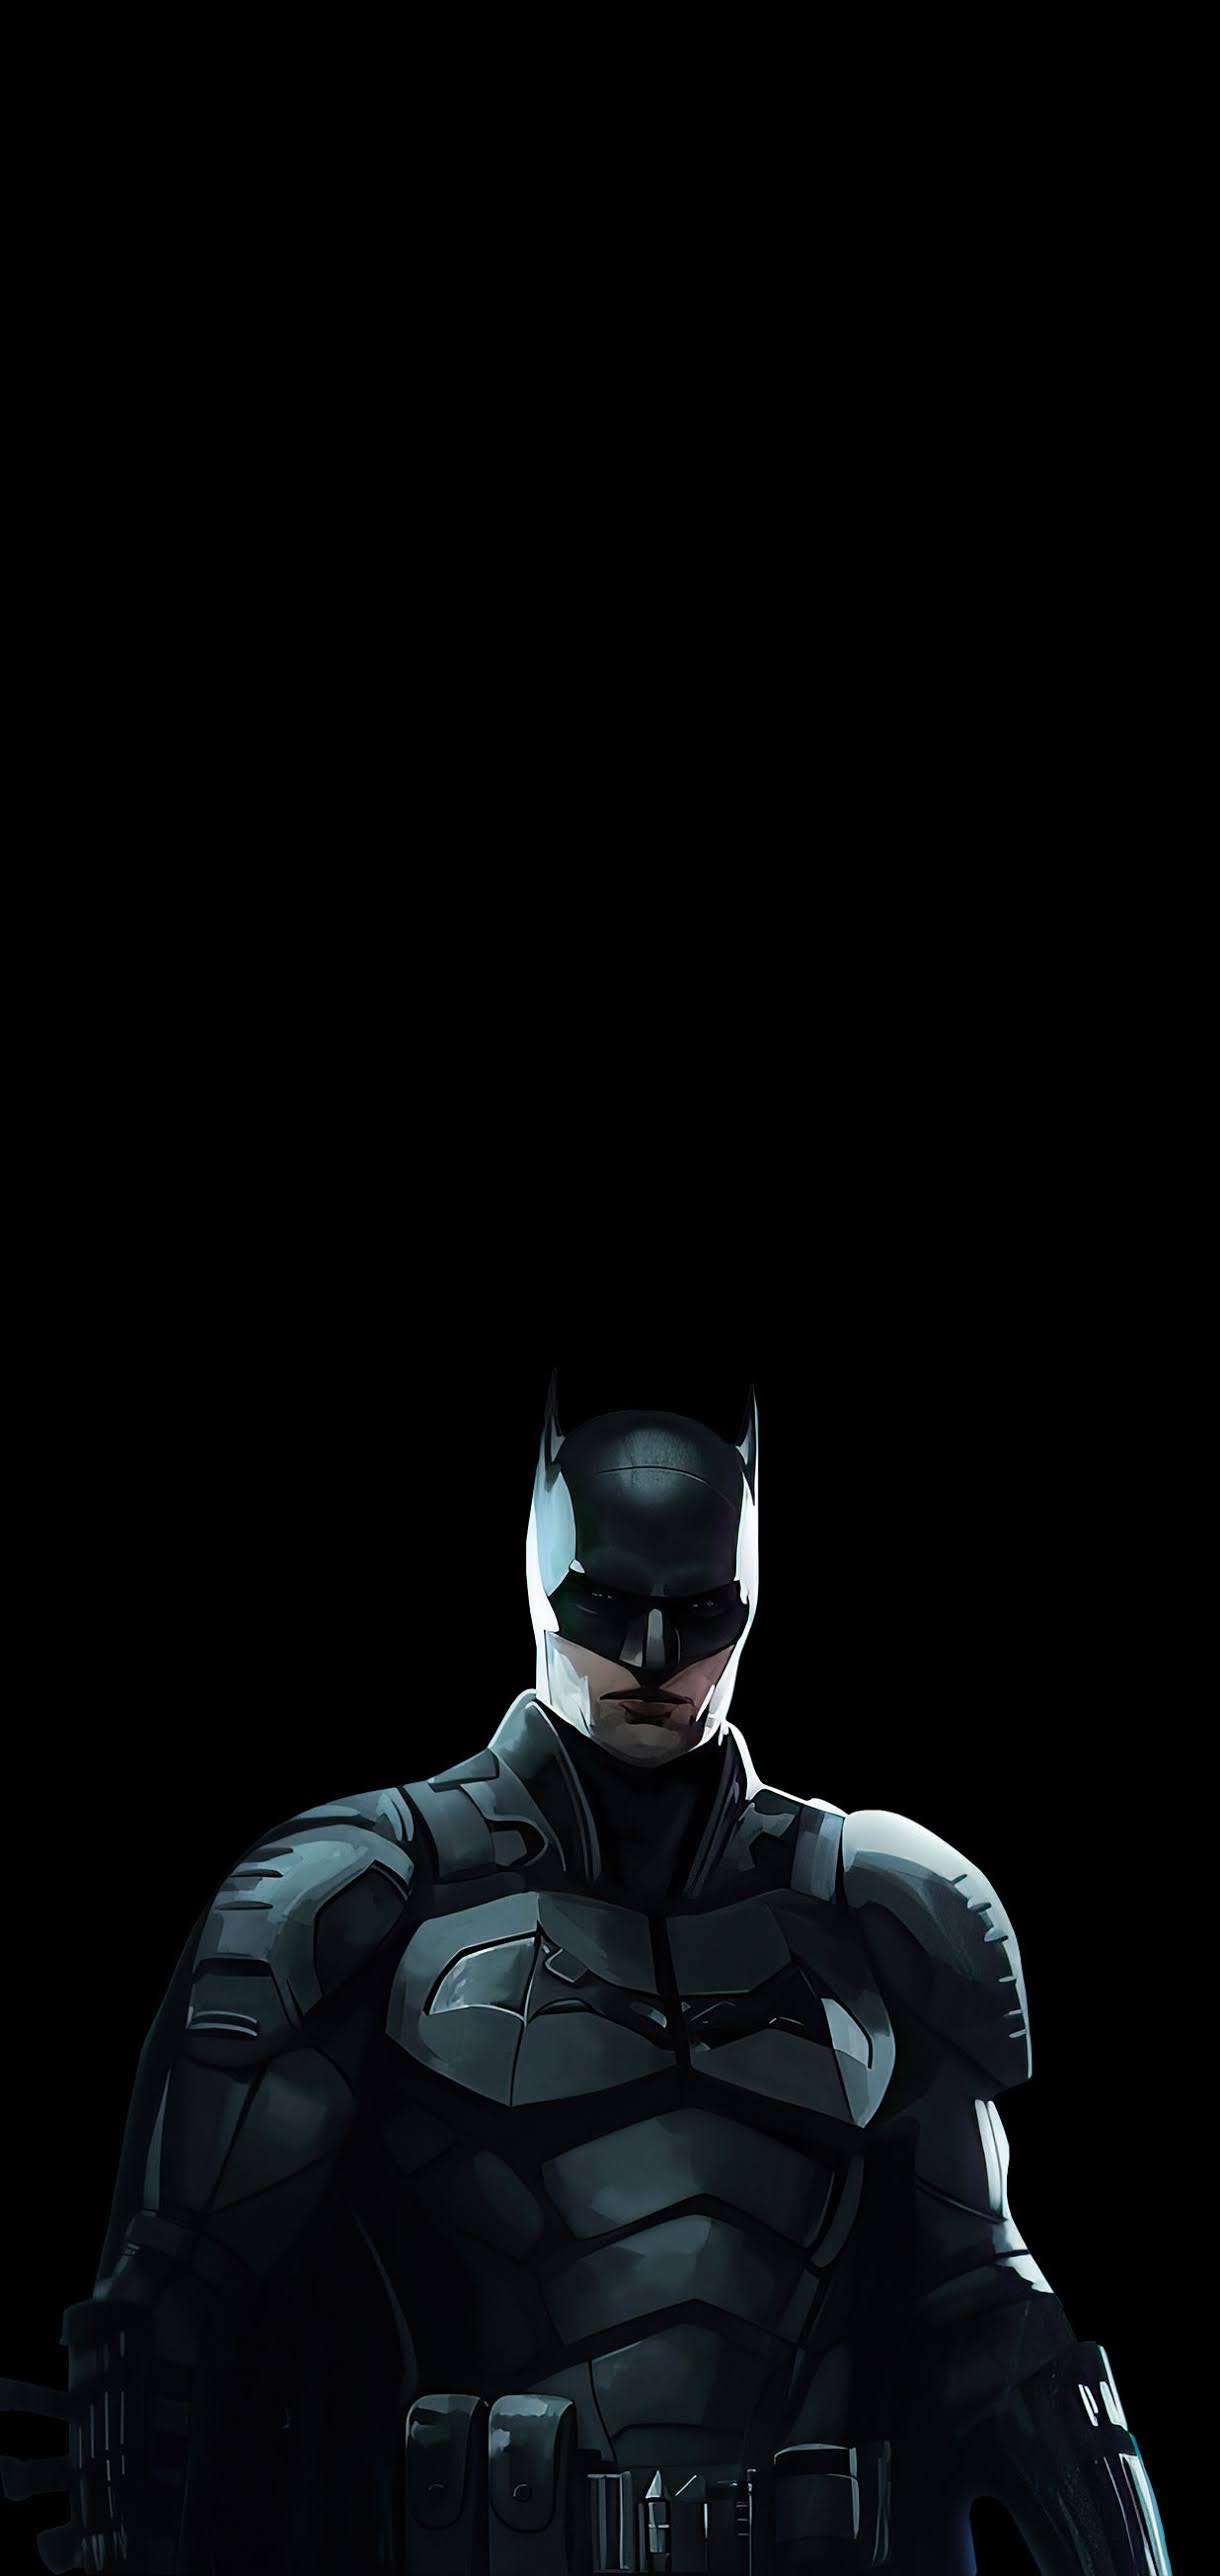 HD OLED BATMAN WALLPAPER